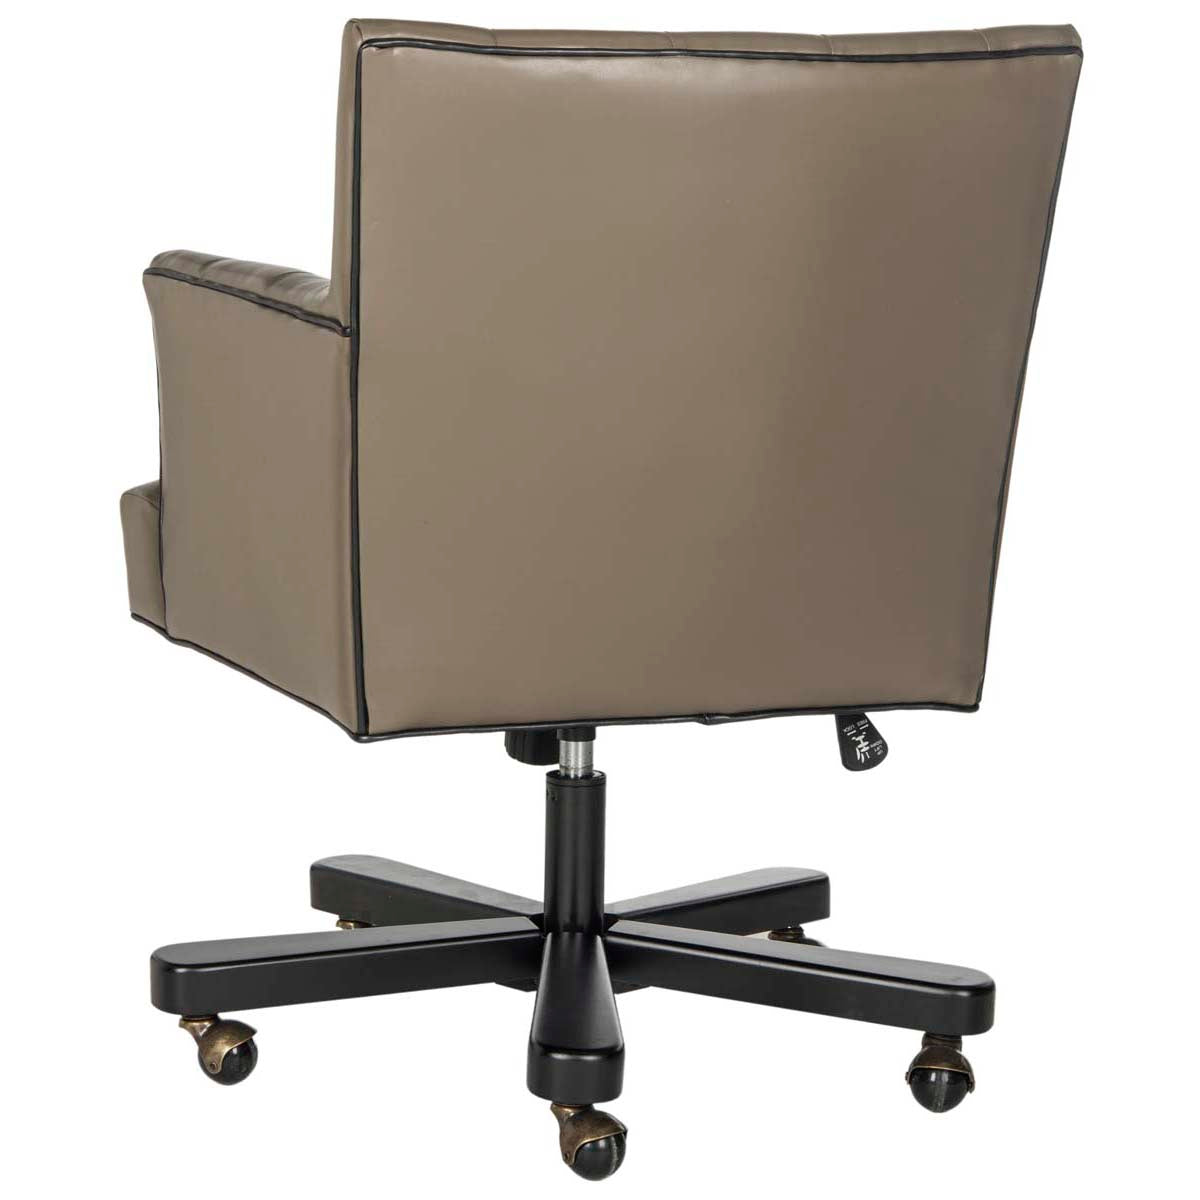 Safavieh Chambers Office Chair , MCR4209 - Clay / Black